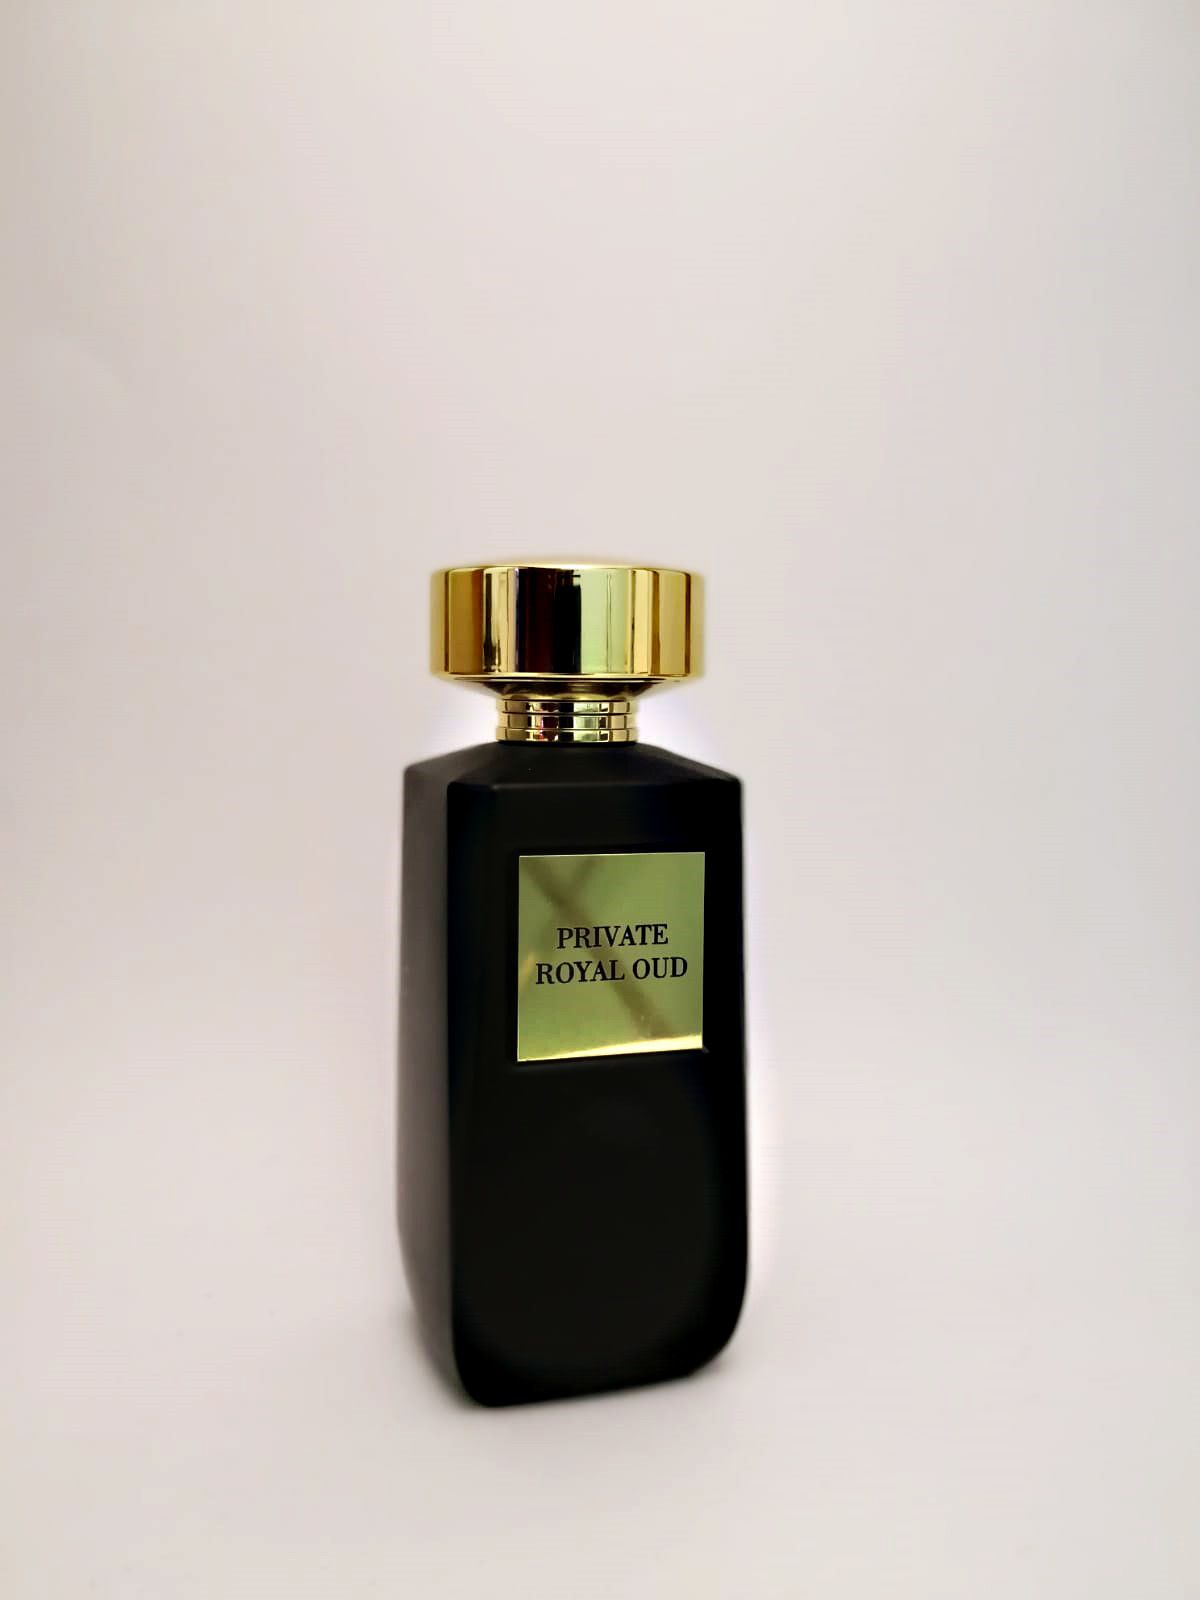 perfume royal oud